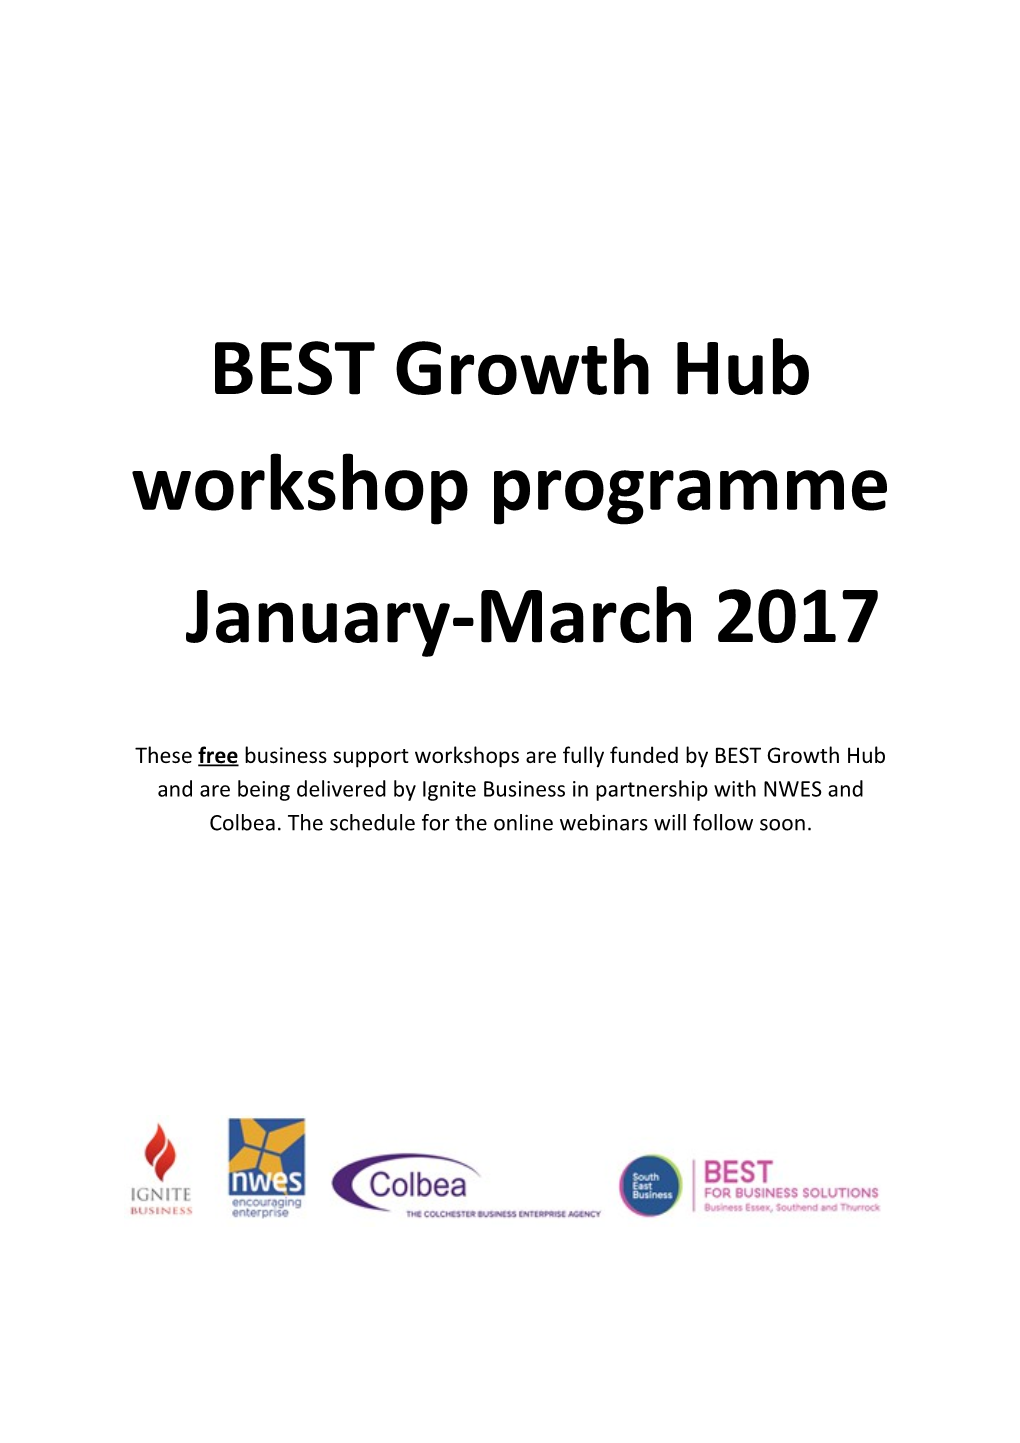 BEST Growth Hub Workshop Programme